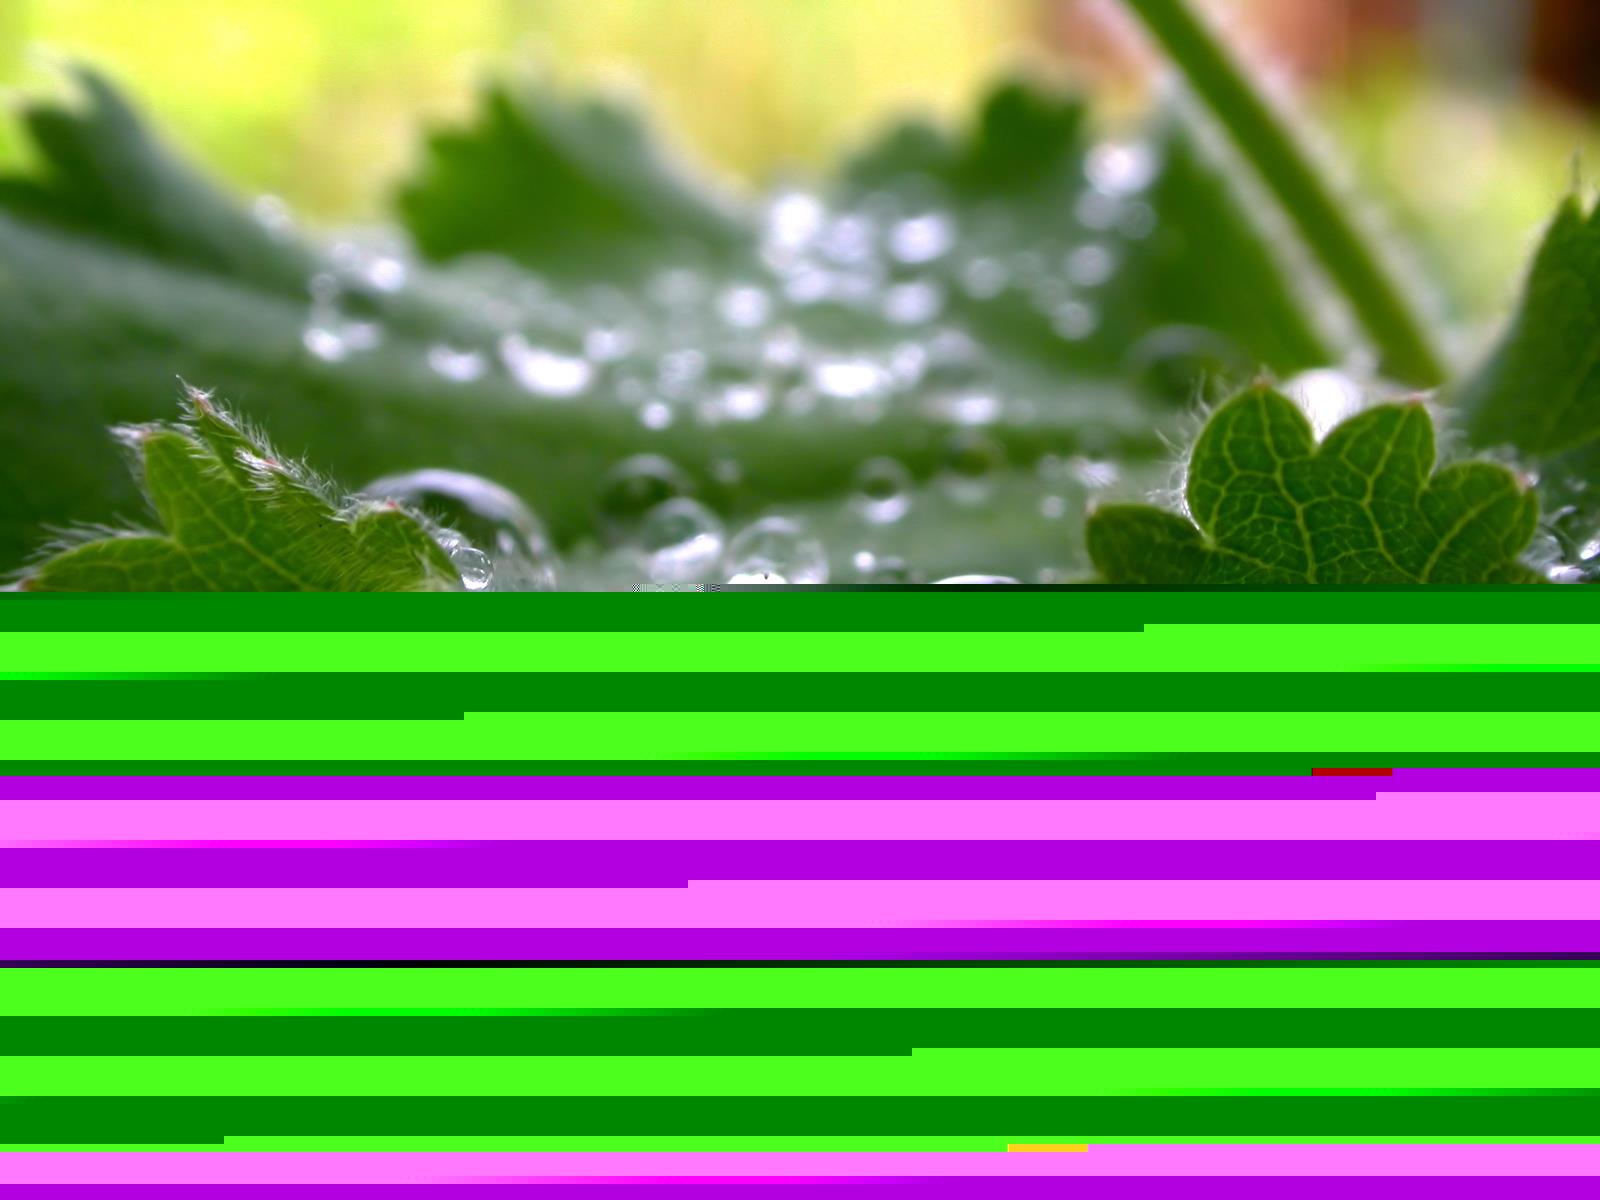 Green plant water droplet computer desktop wallpaper image